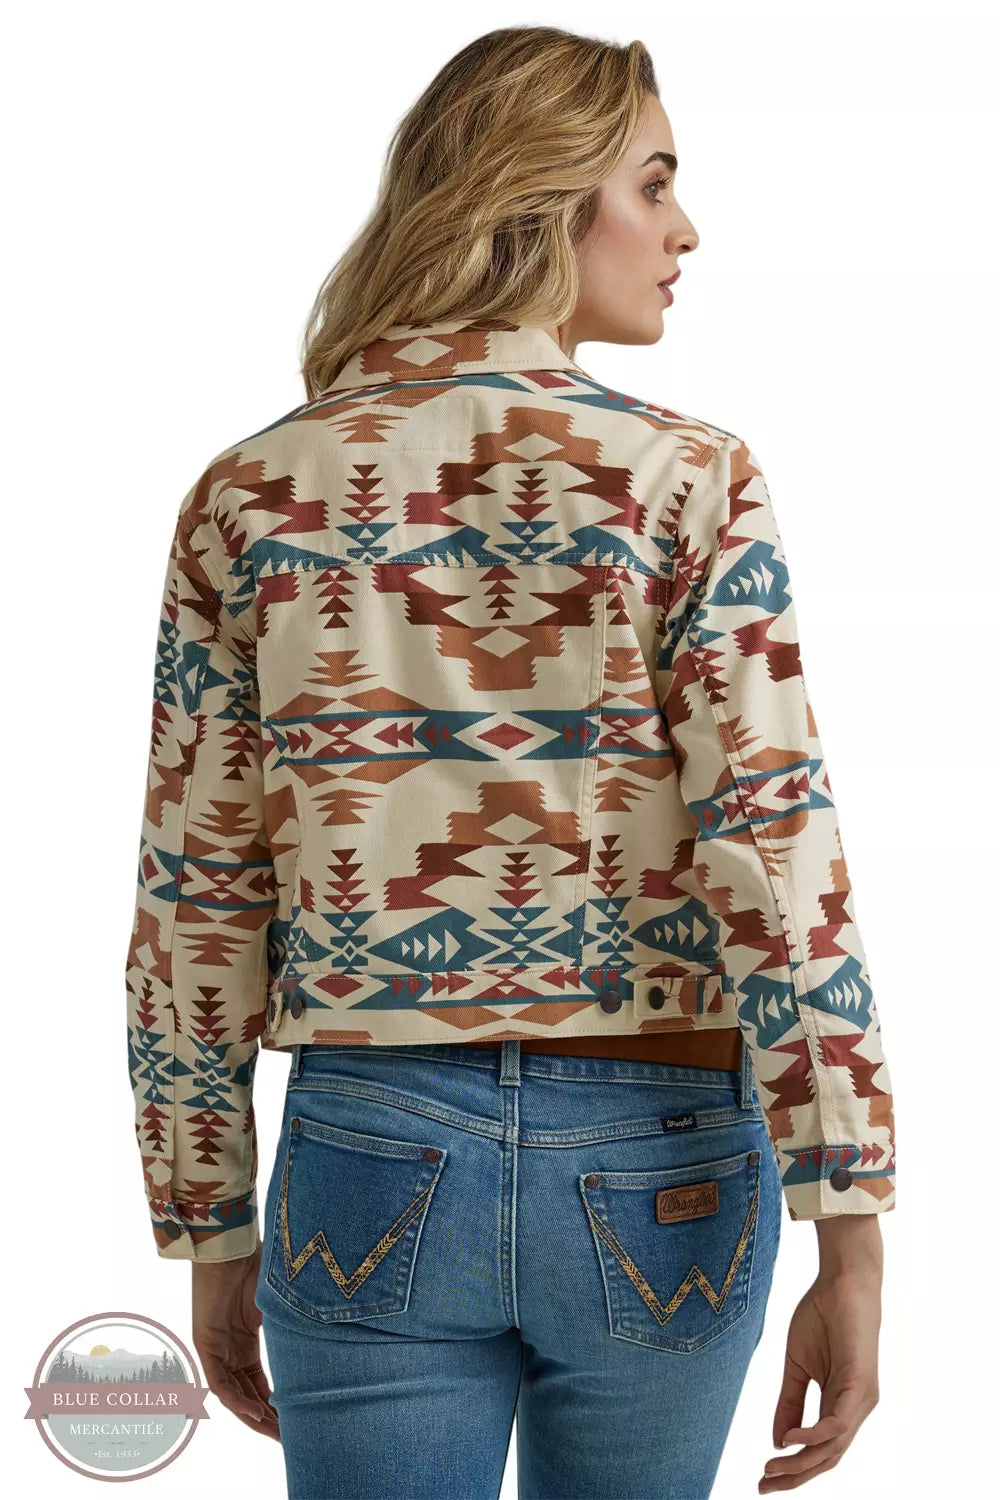 Wrangler 112346156 Western Printed Boyfriend Jacket in Aztec Back View